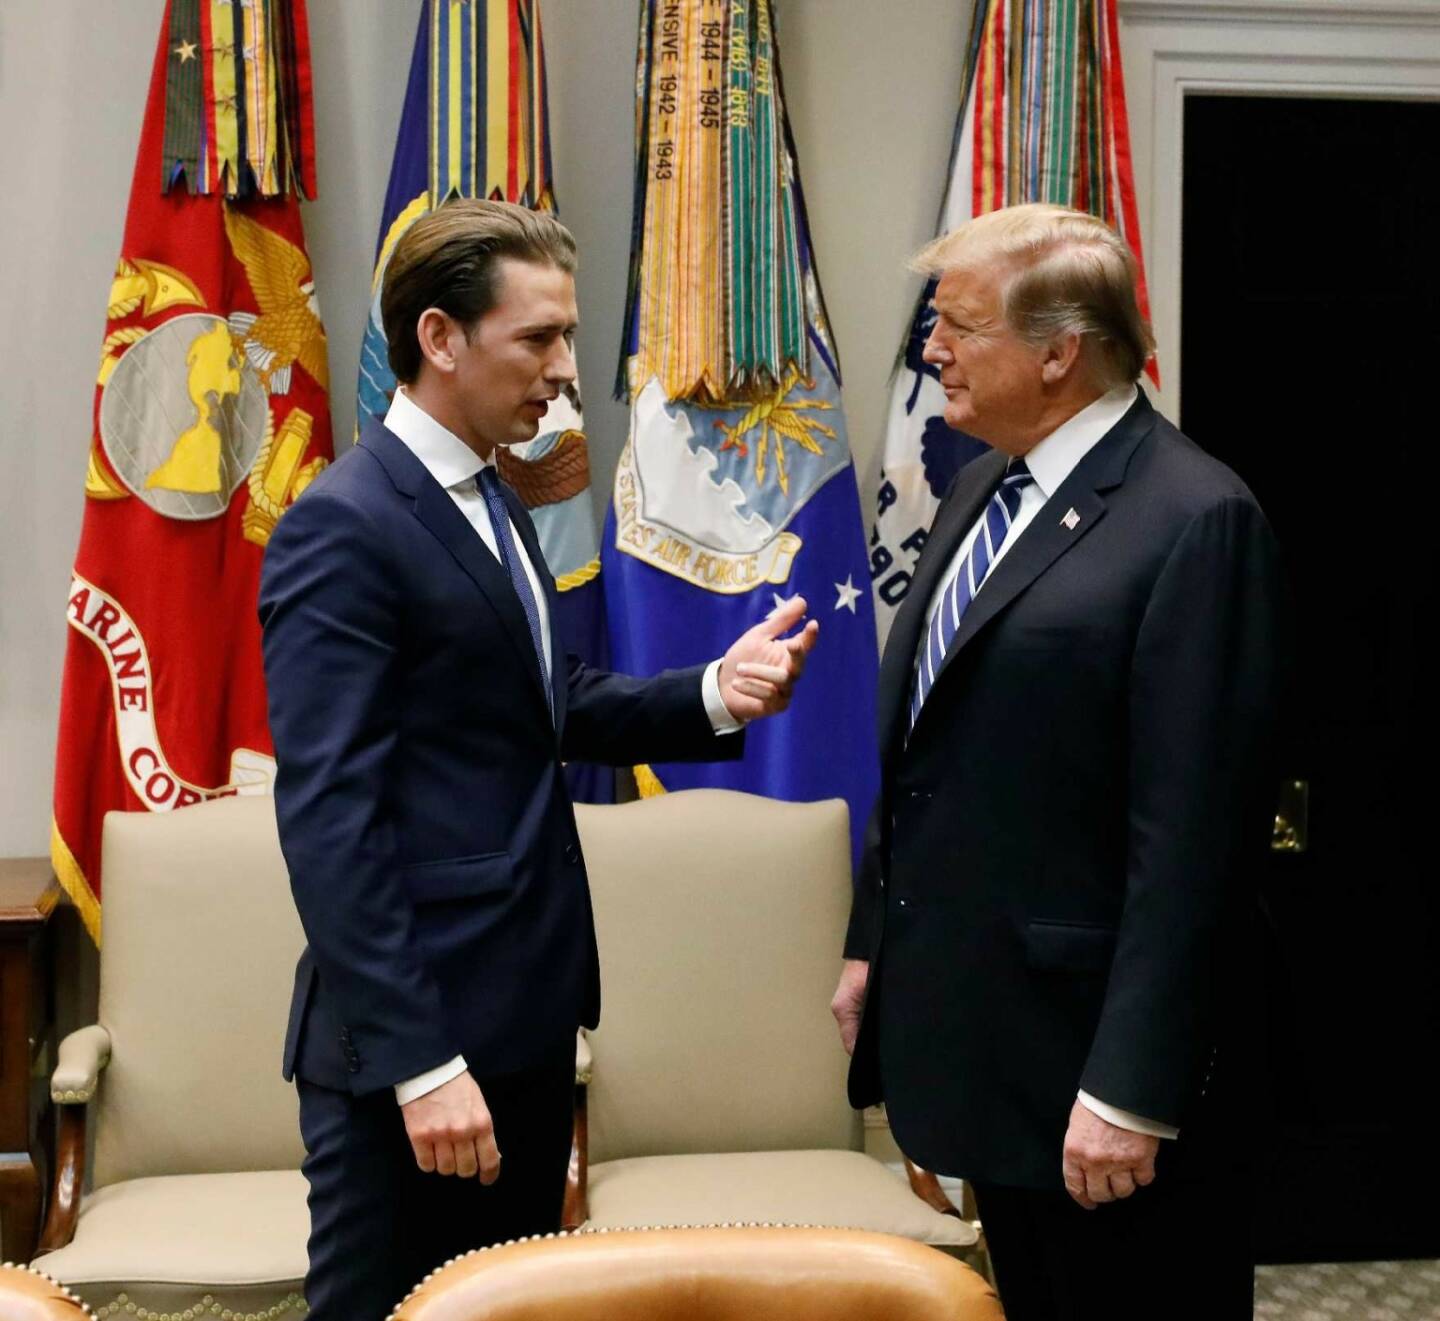 Am 20. Februar 2019 traf Bundeskanzler Sebastian Kurz (l.) im Rahmen seiner Washington Reise den Amerikanischen Präsident Donald Trump (r.). FotografIn: Dragan Tatic, Quelle: BKA